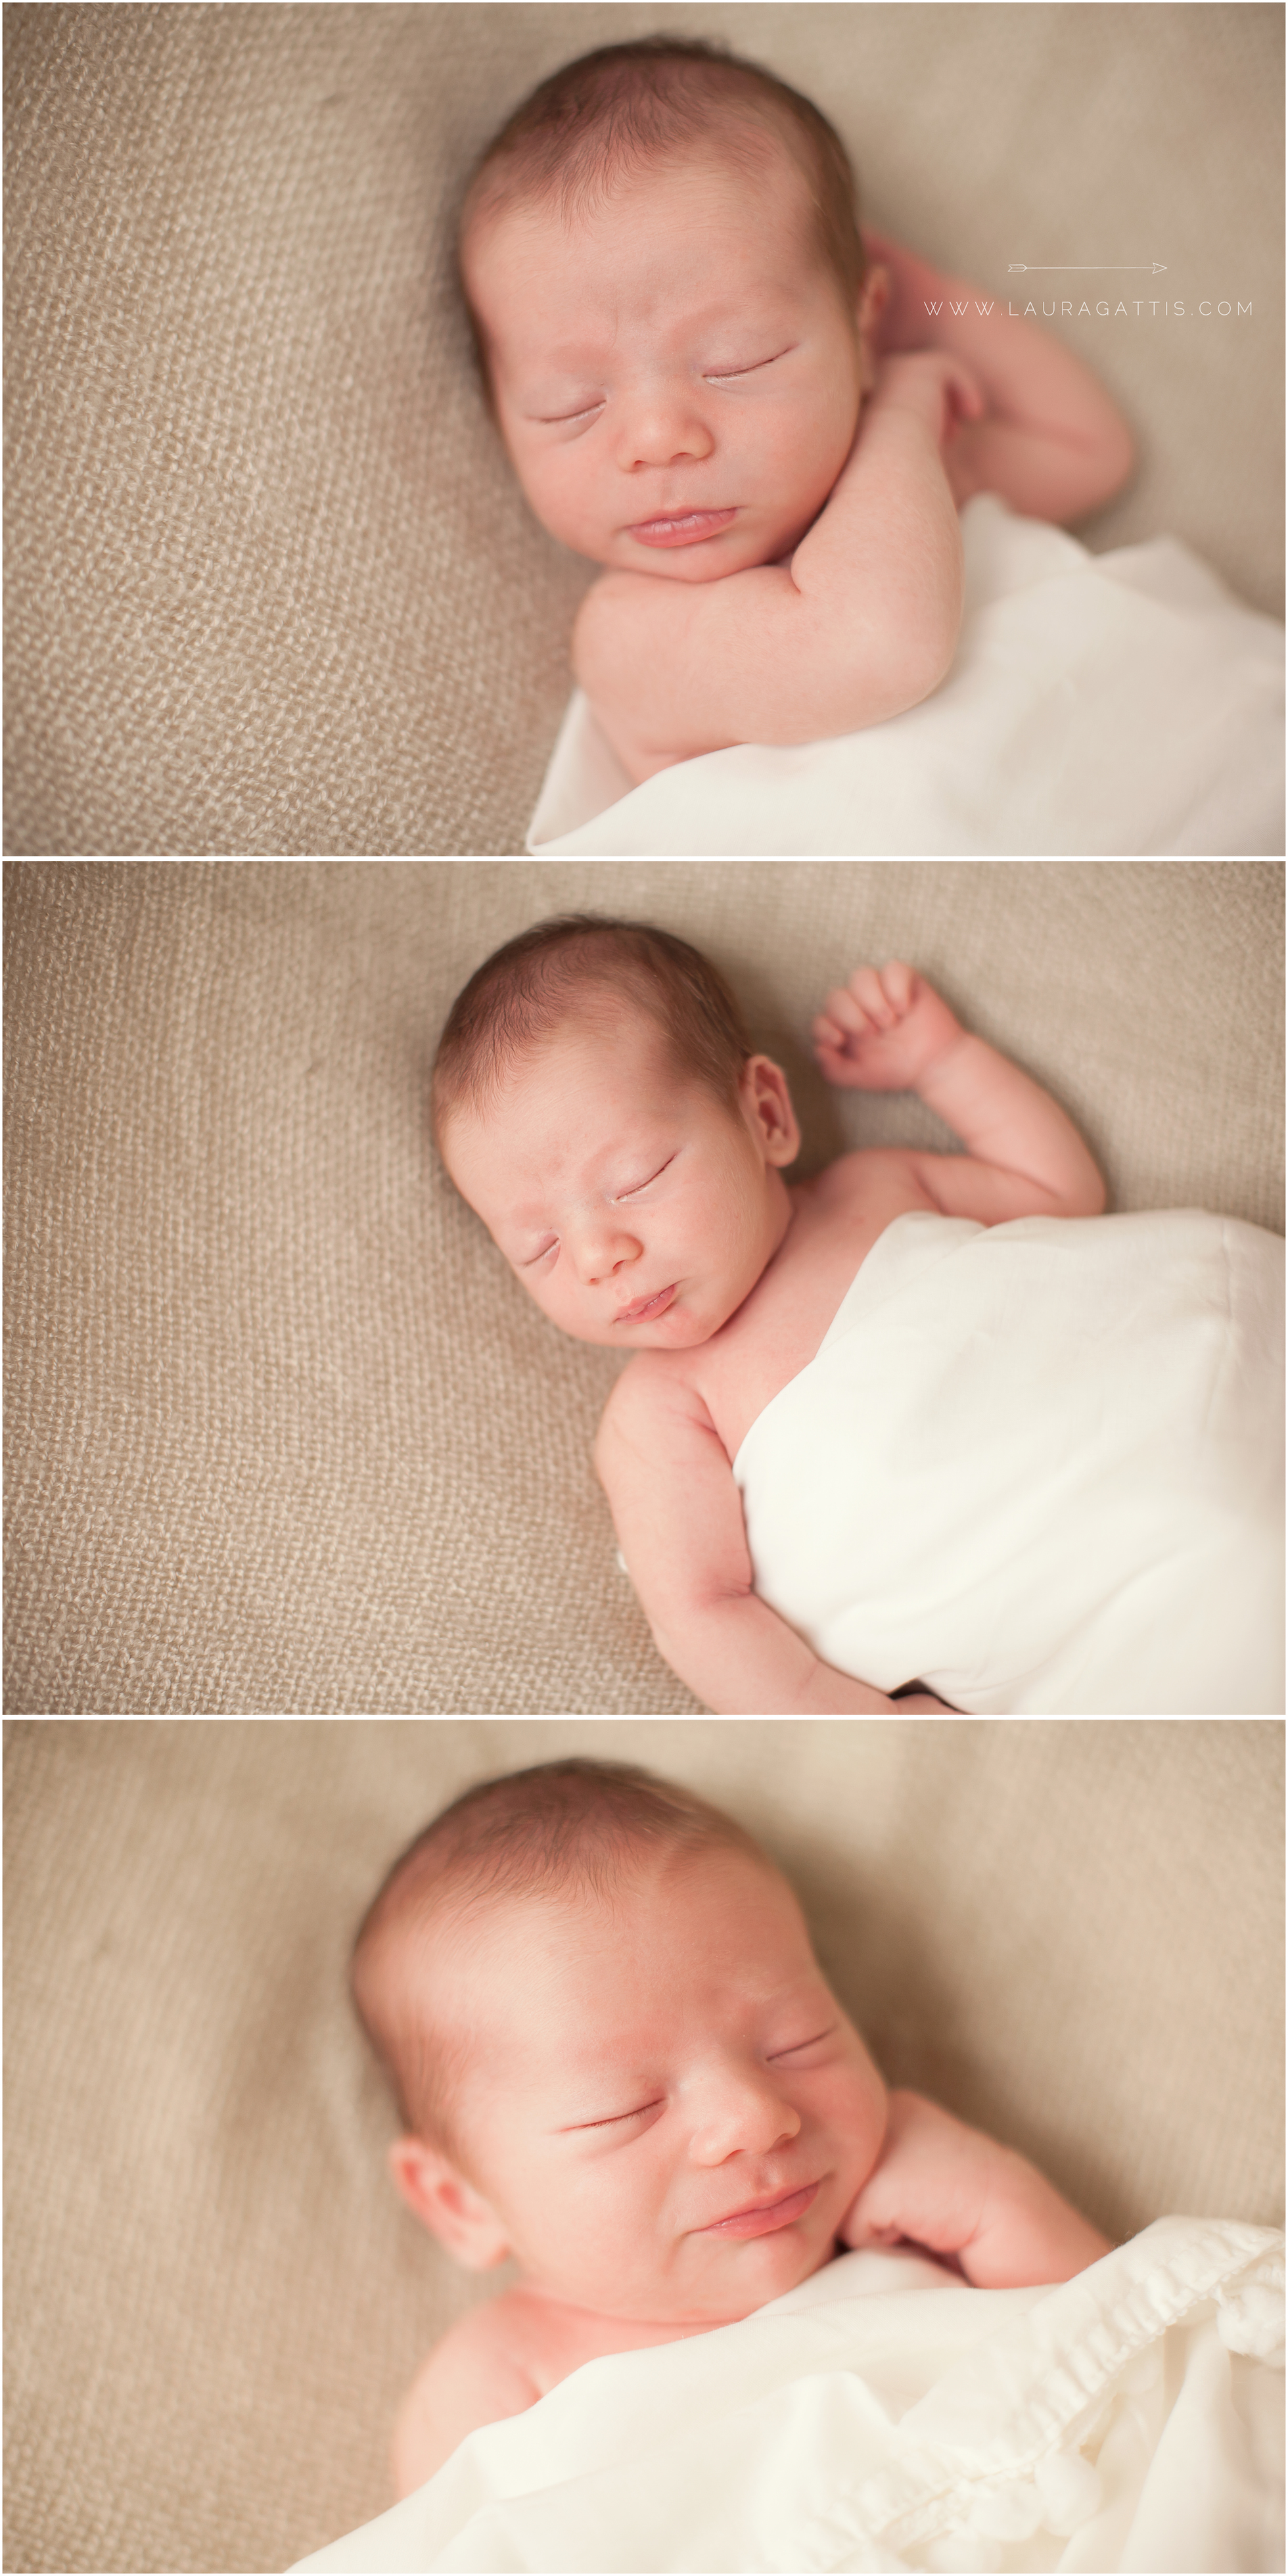 beautiful wrapped newborn | laura gattis photography | www.lauragattis.com